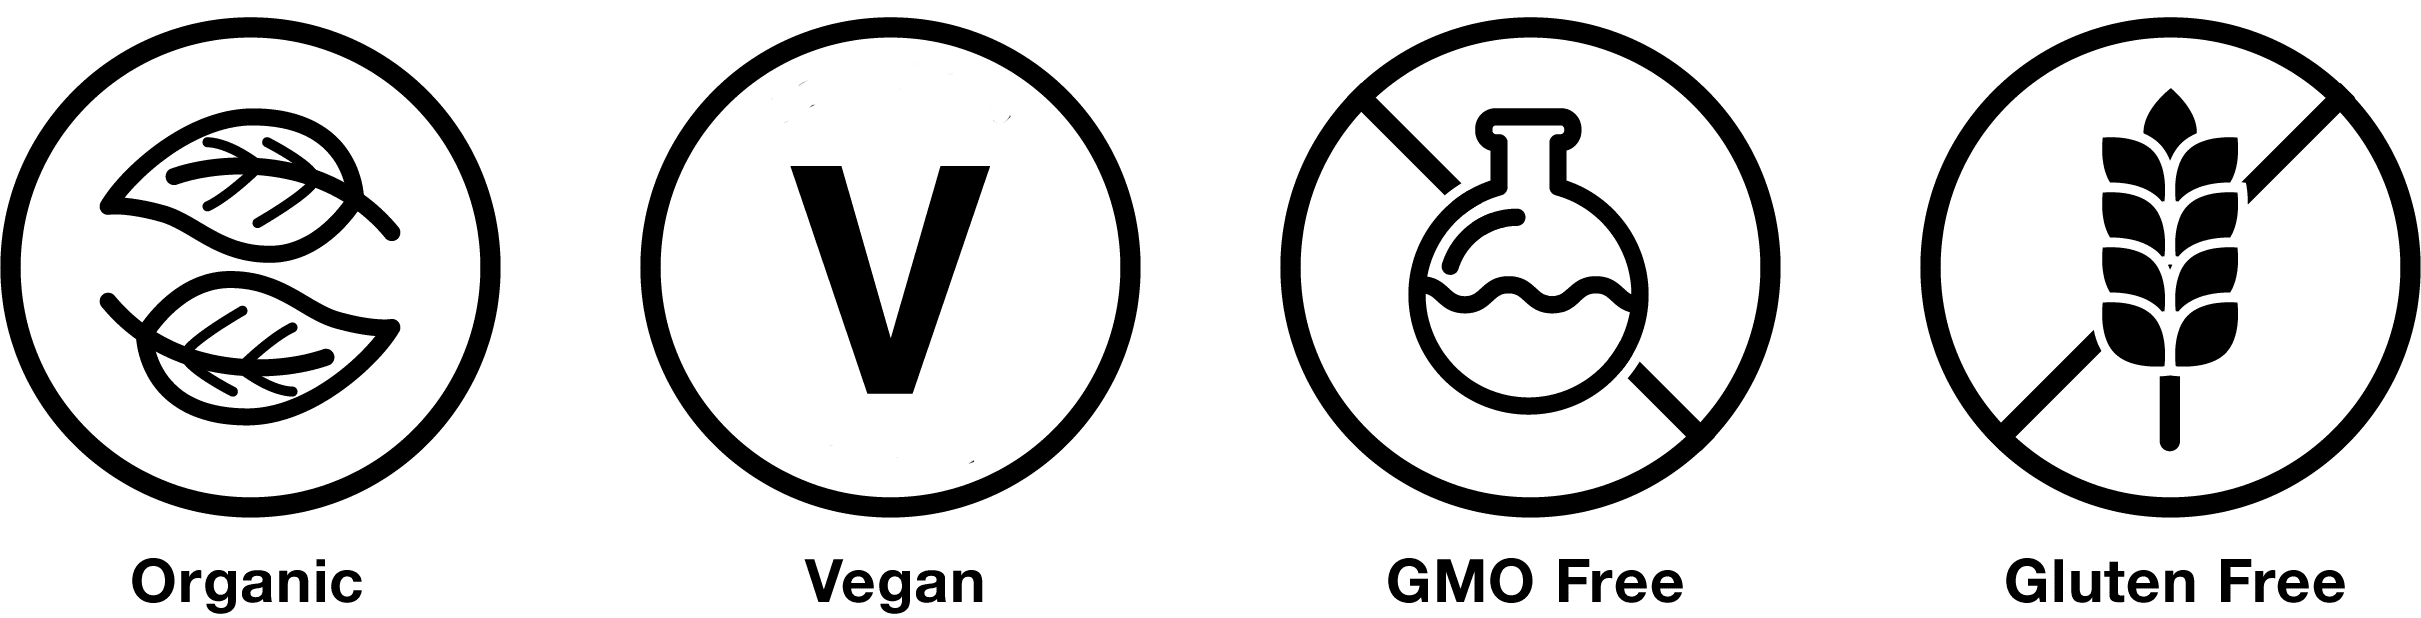 fastblast organic, vegan, gmo free, and gluten free logos